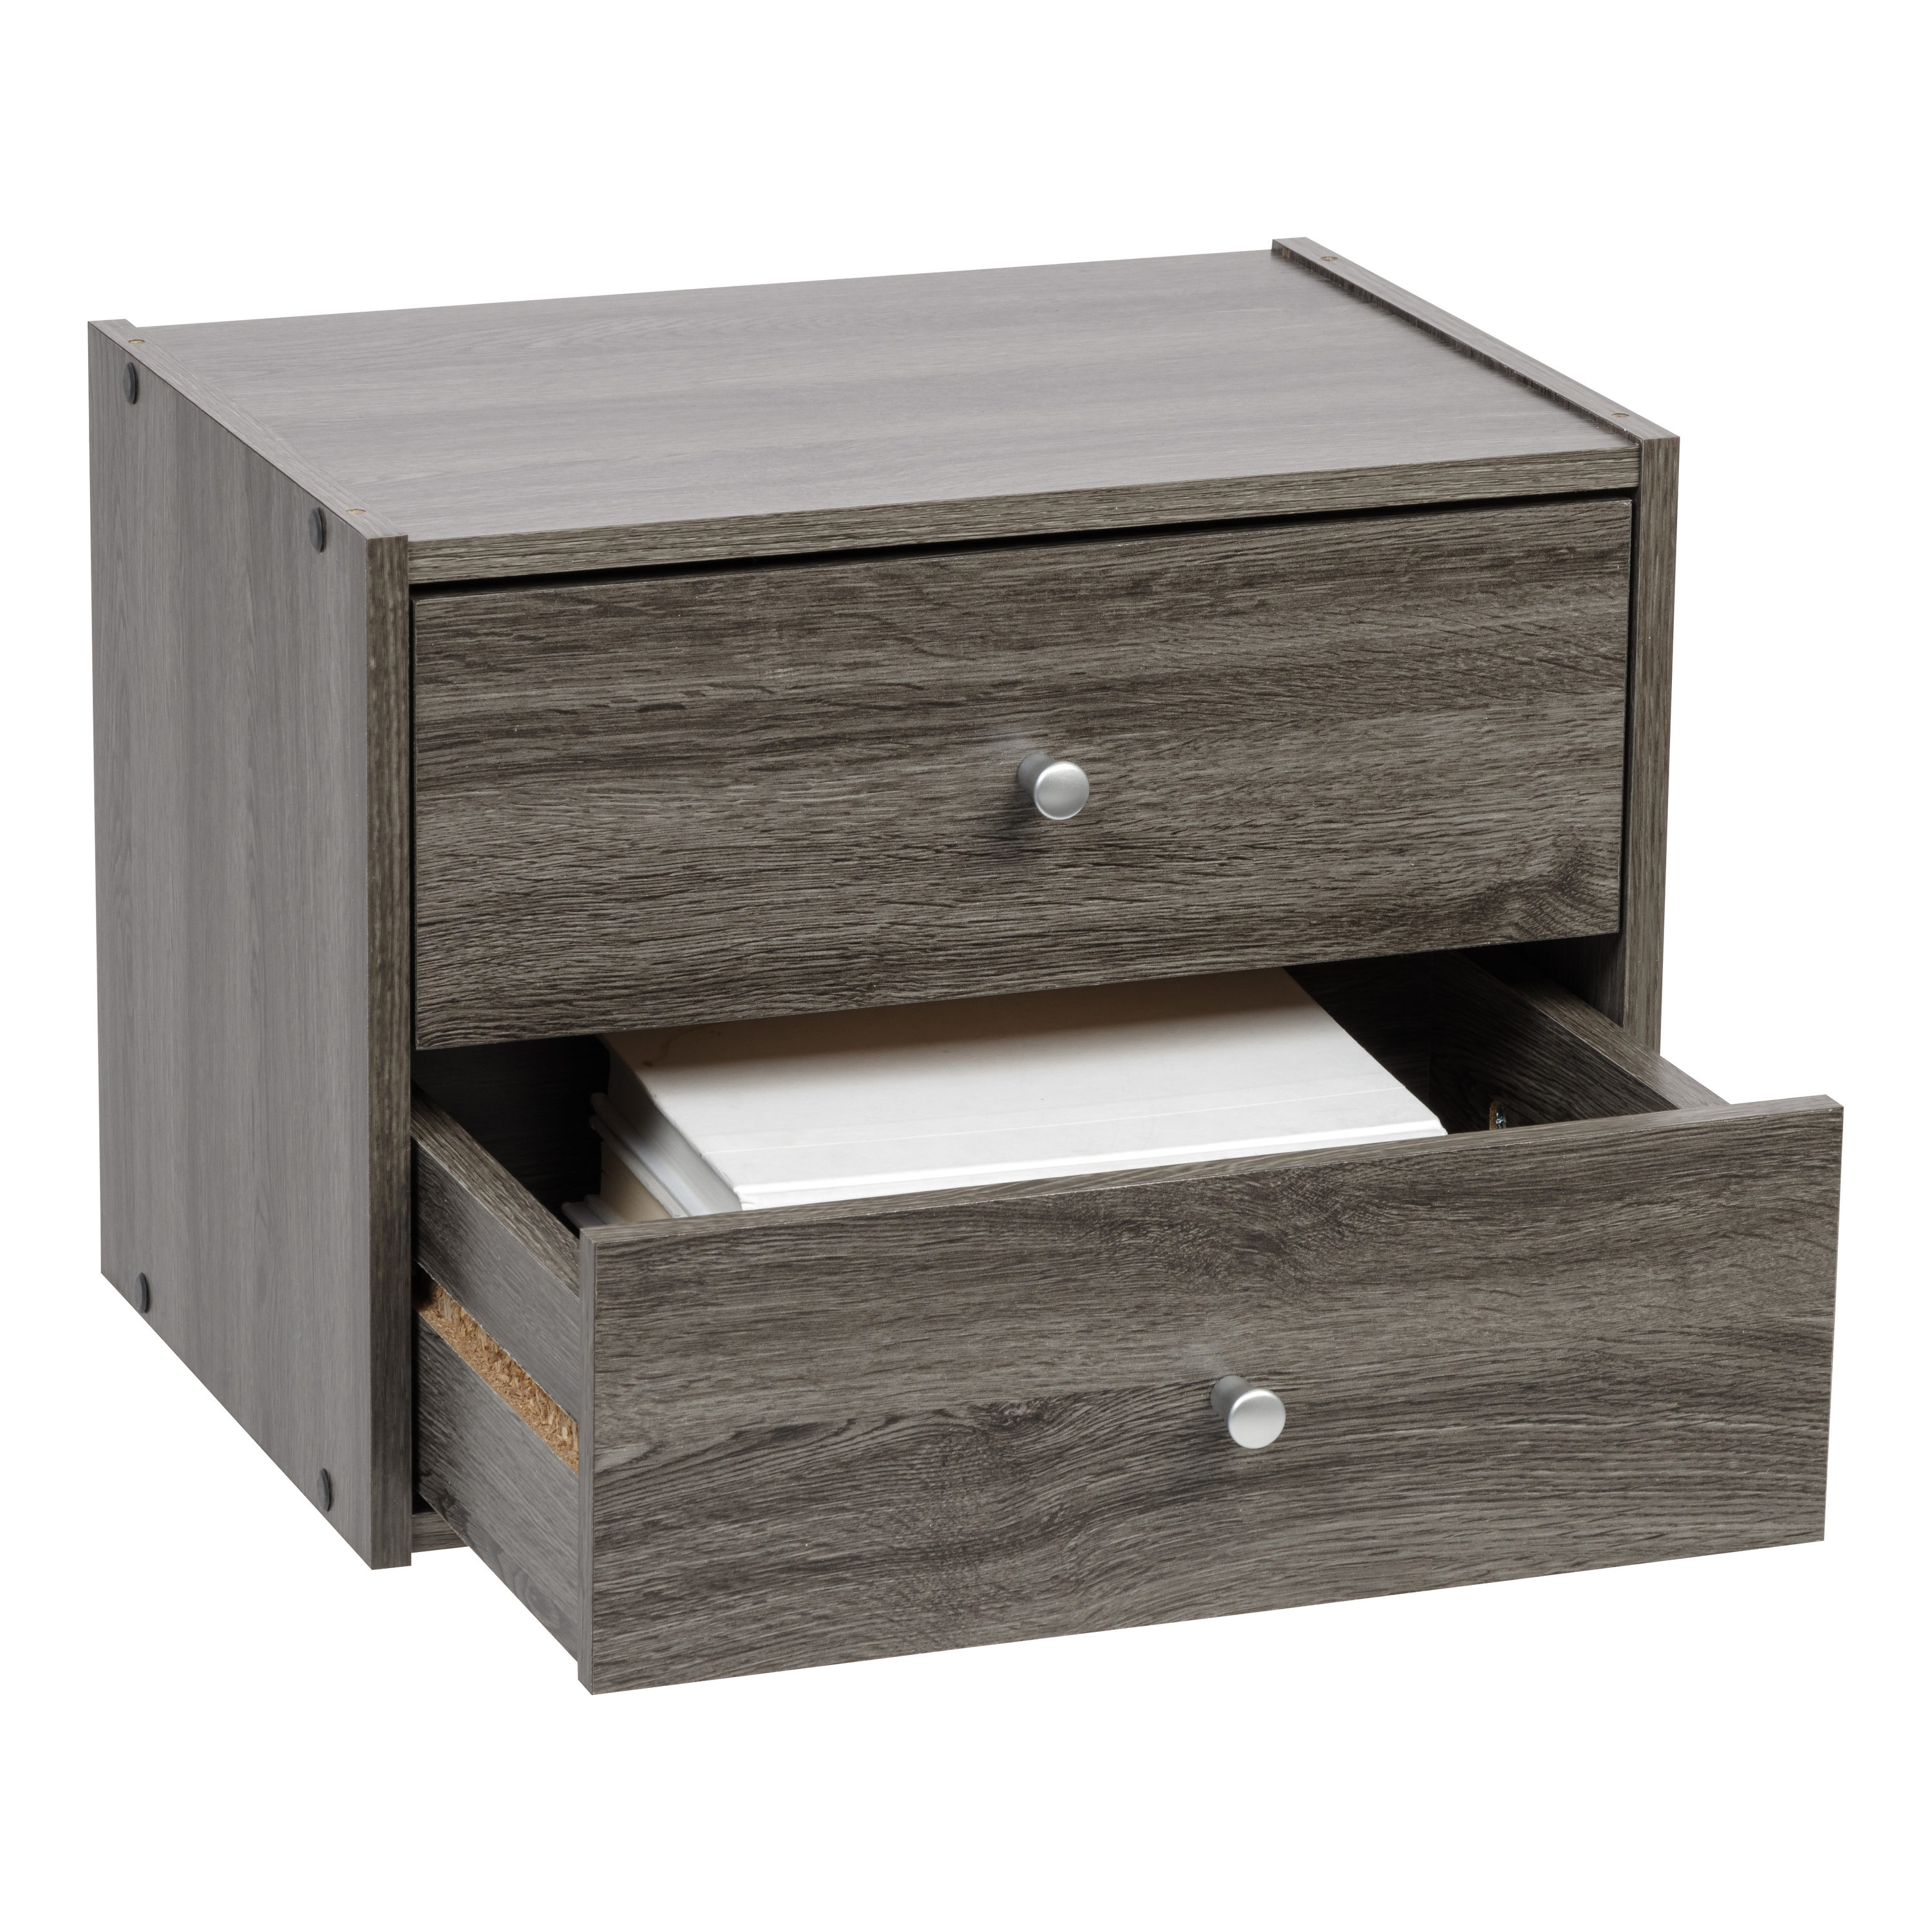 Iris Usa Tachi Modular Wood Stacking Storage Box With Shelf, Light